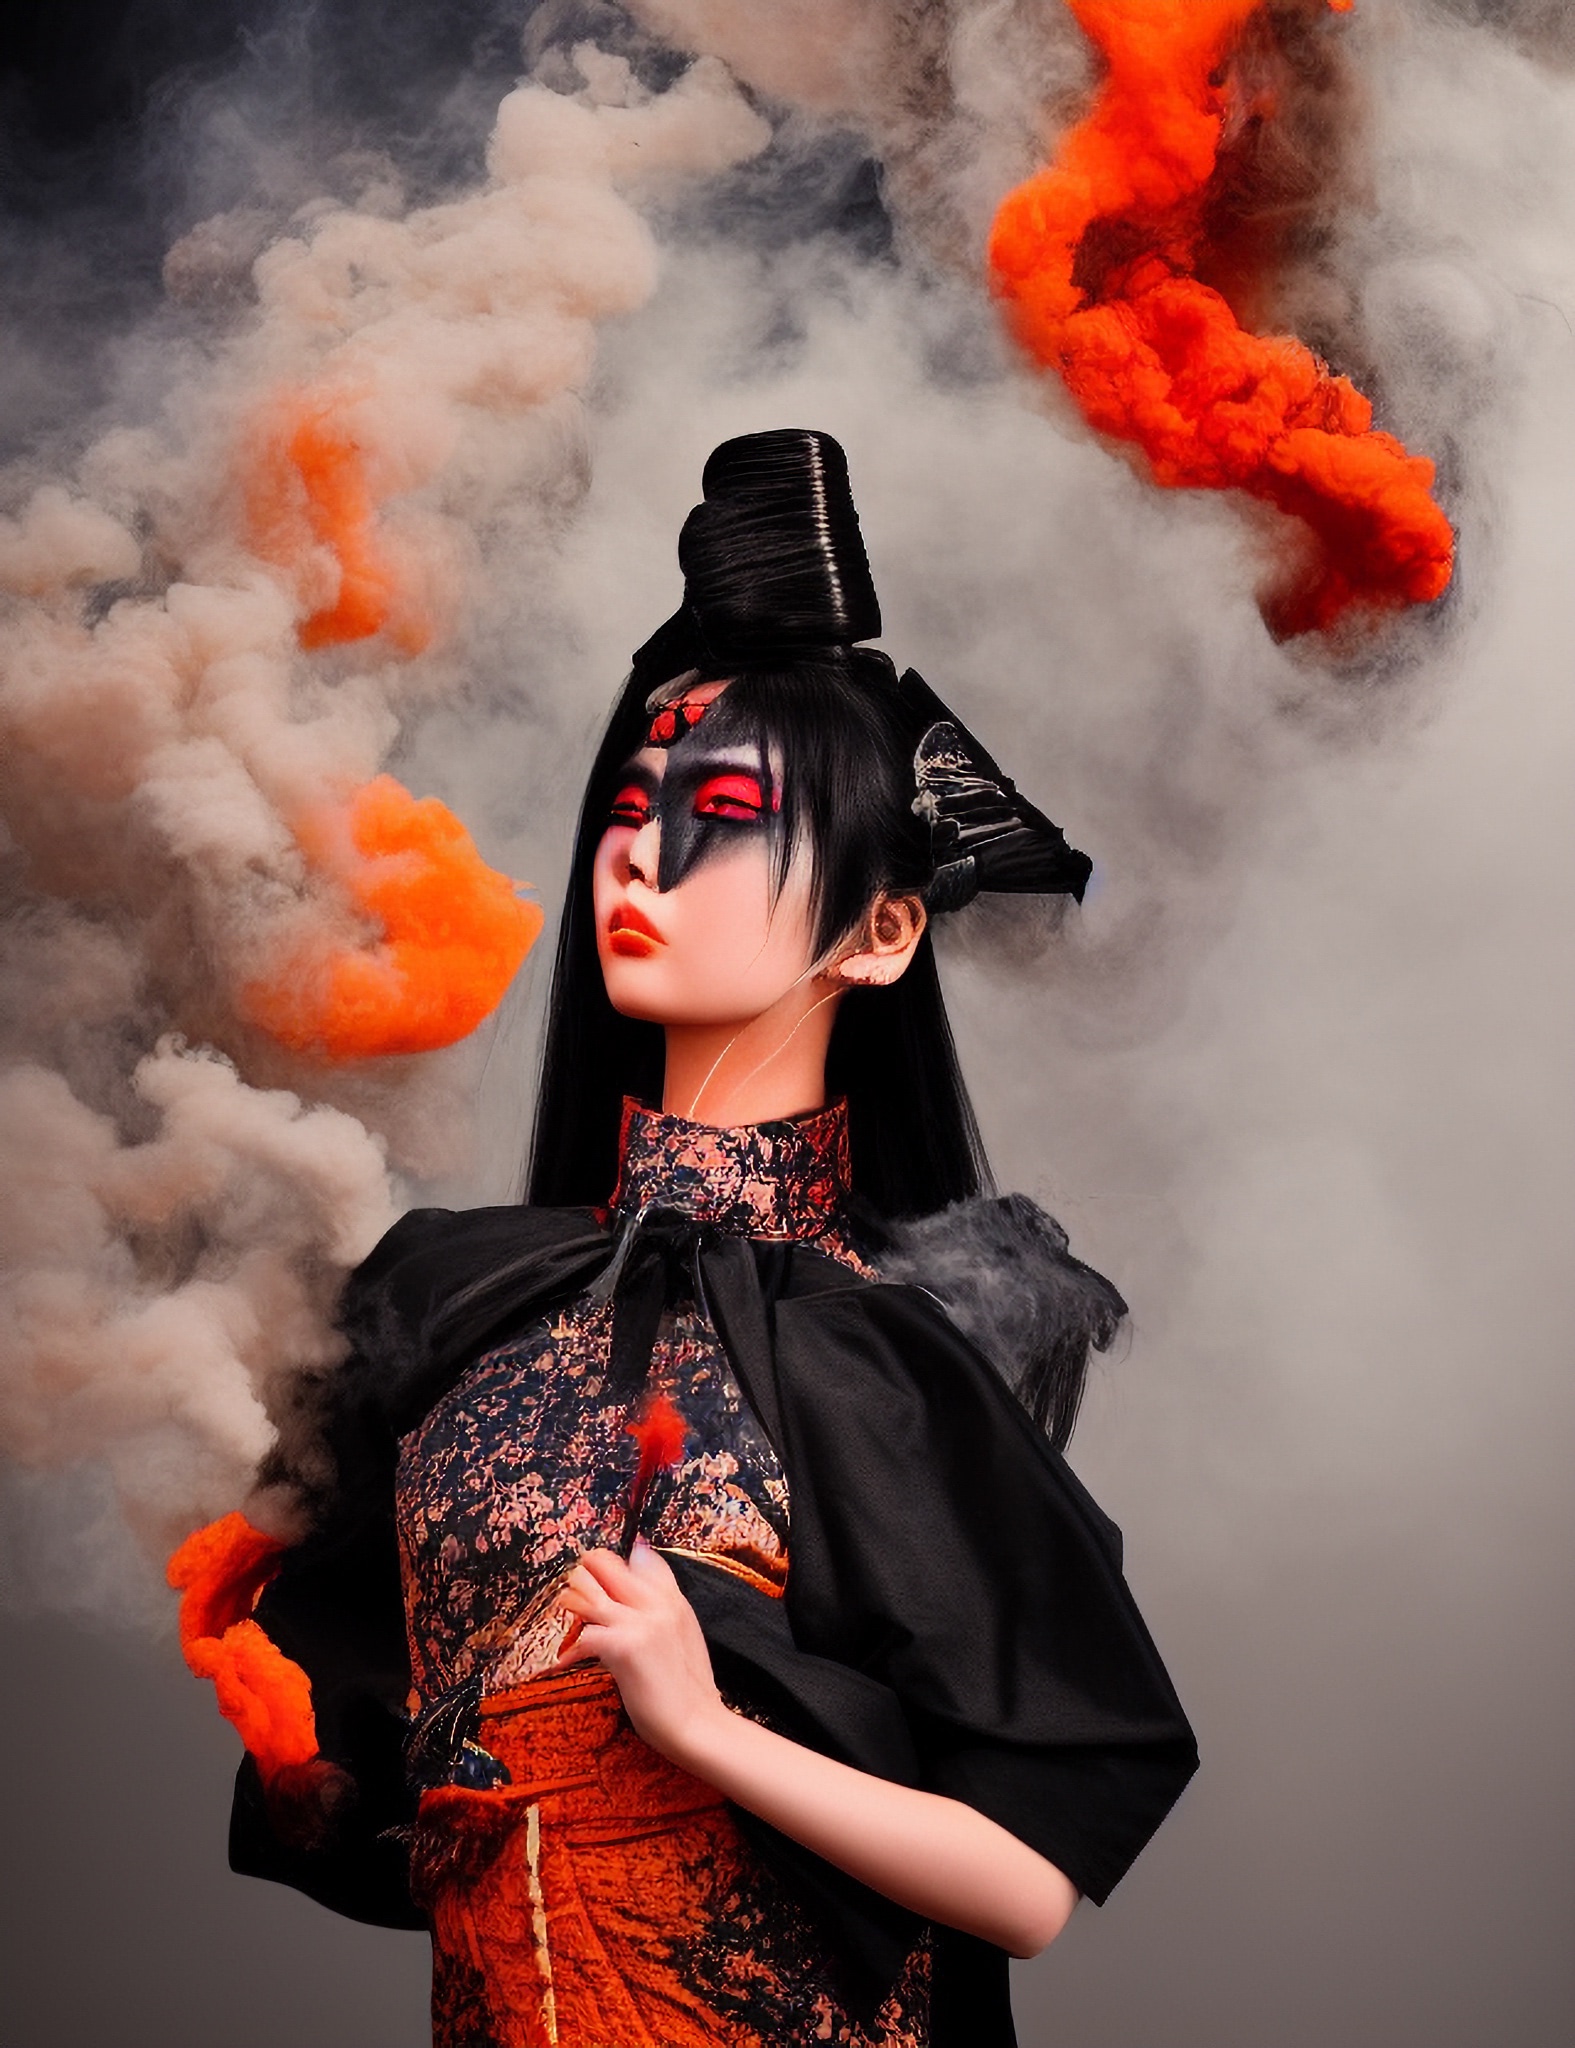 japanese-model-portrait-fire-flames-traditional-dress-3